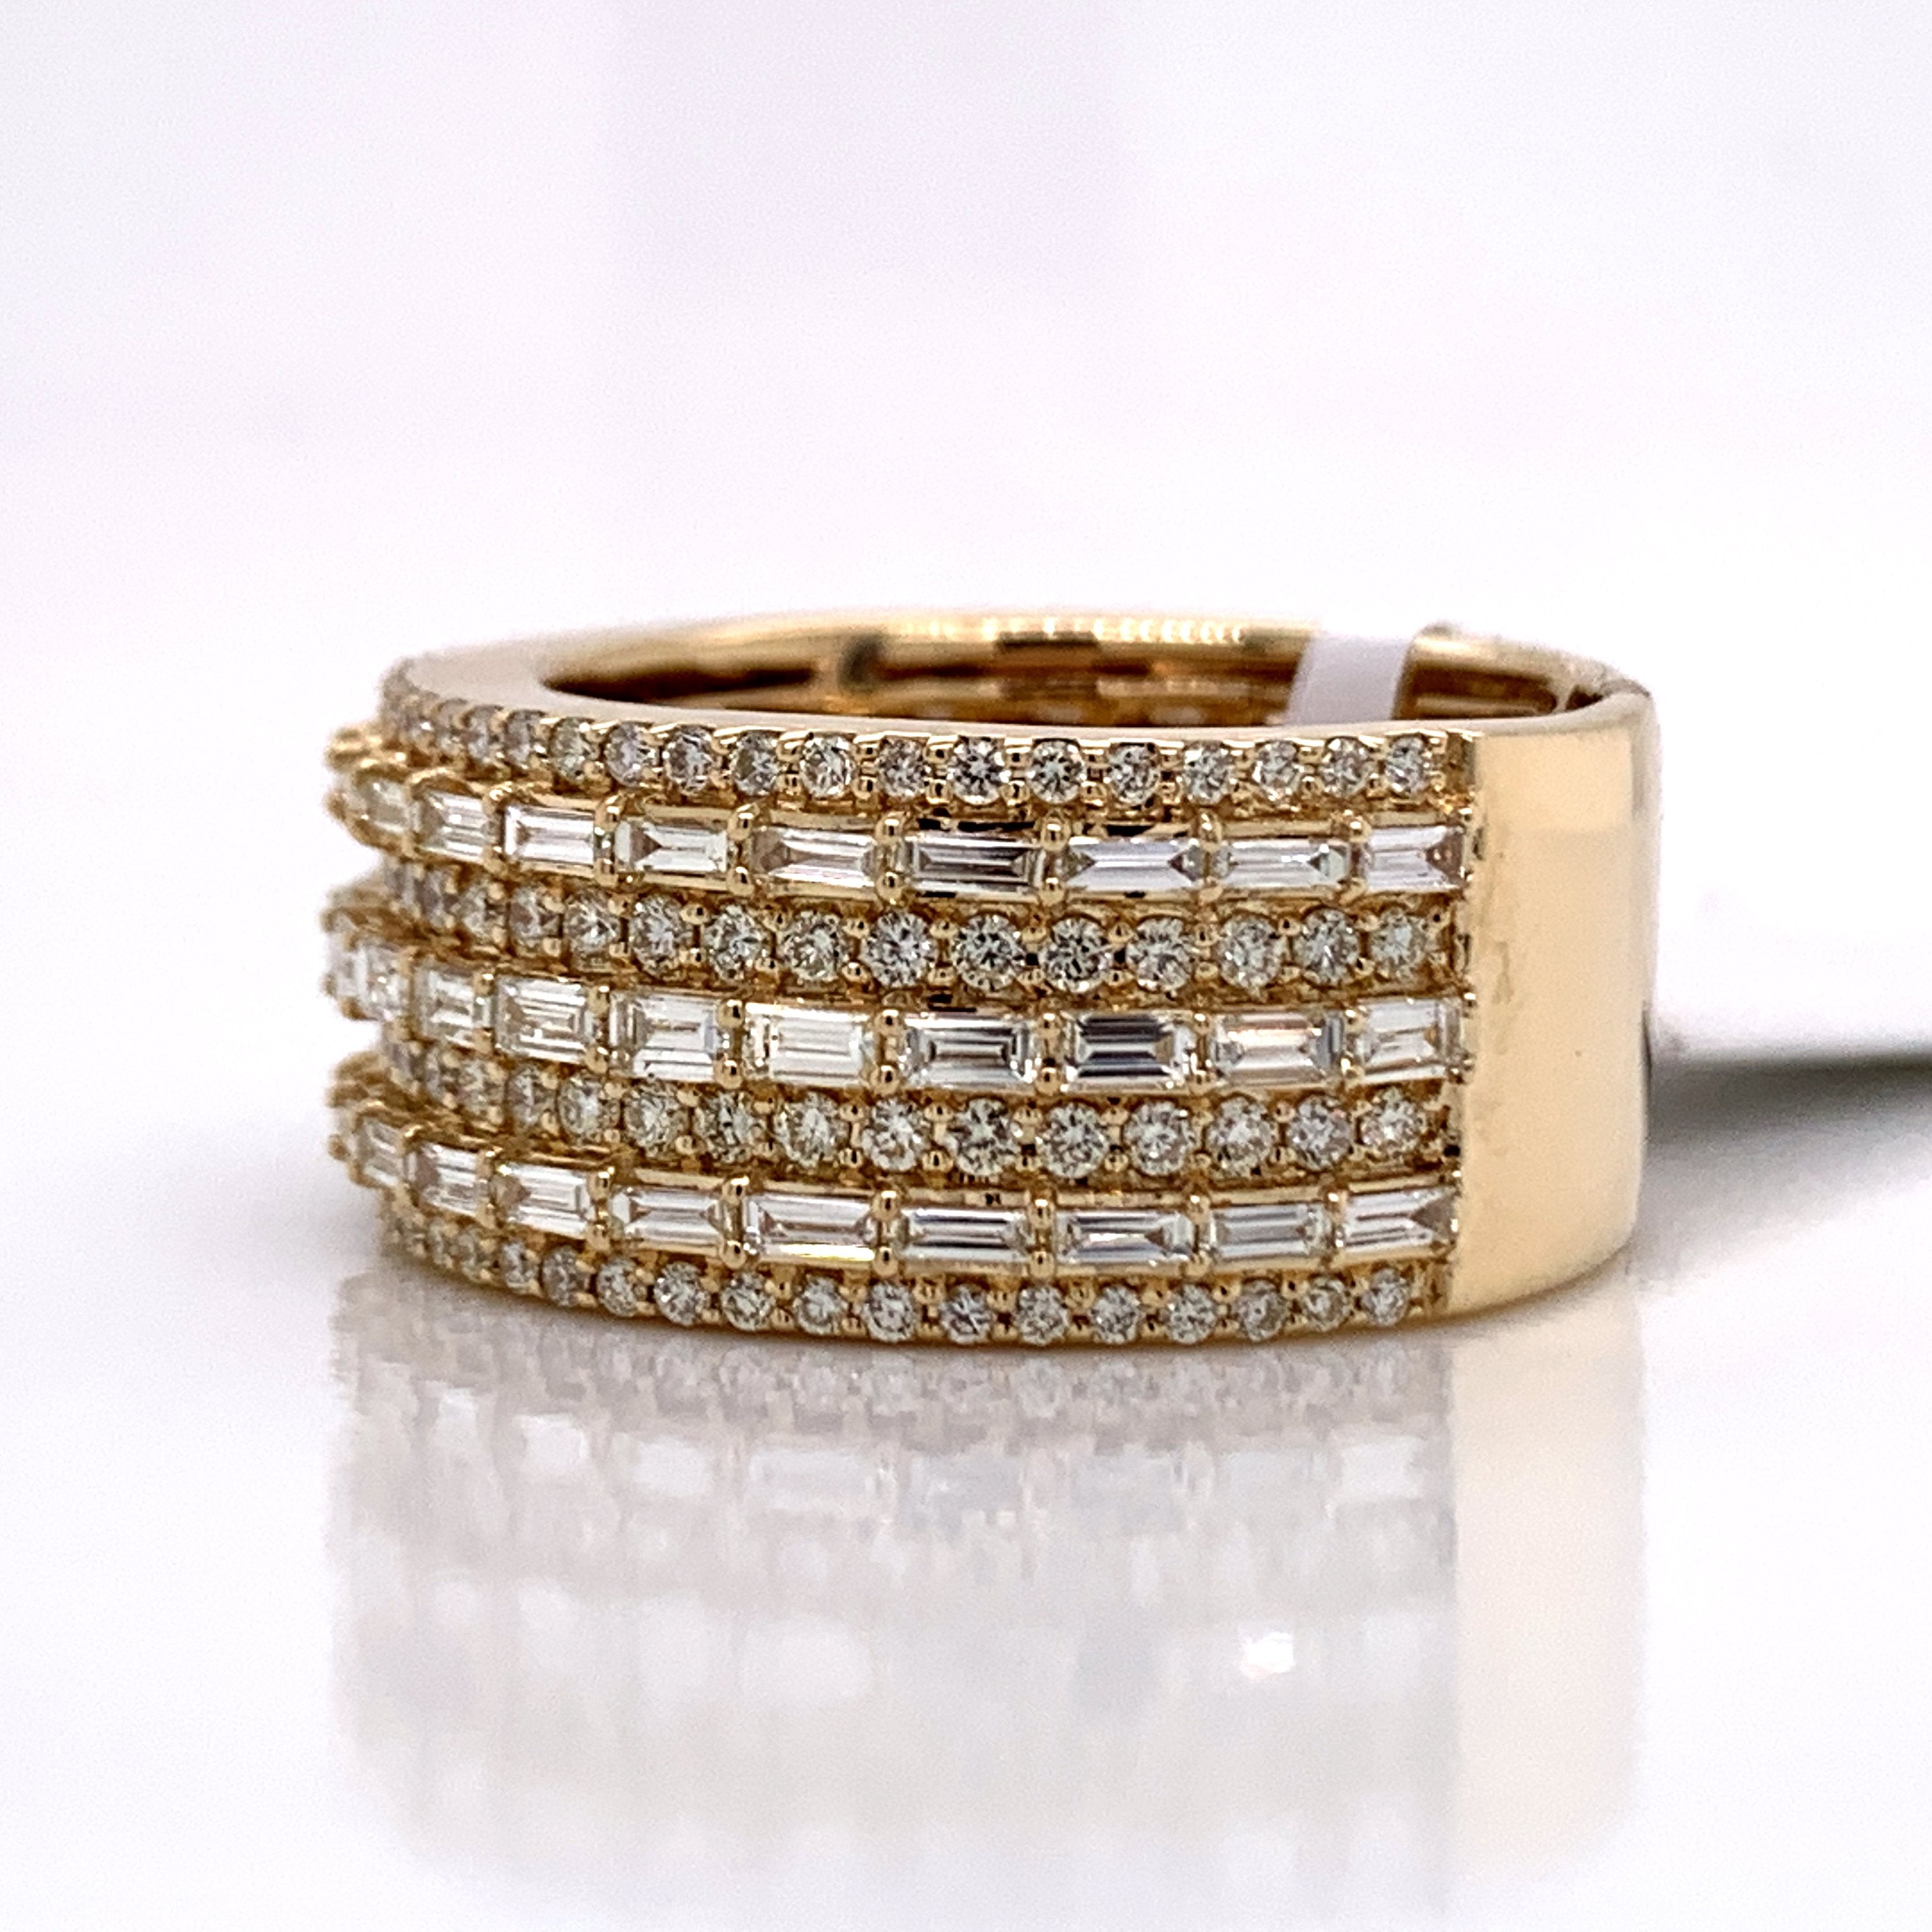 3.50 CT. Diamond Ring in 14K Gold - White Carat Diamonds 